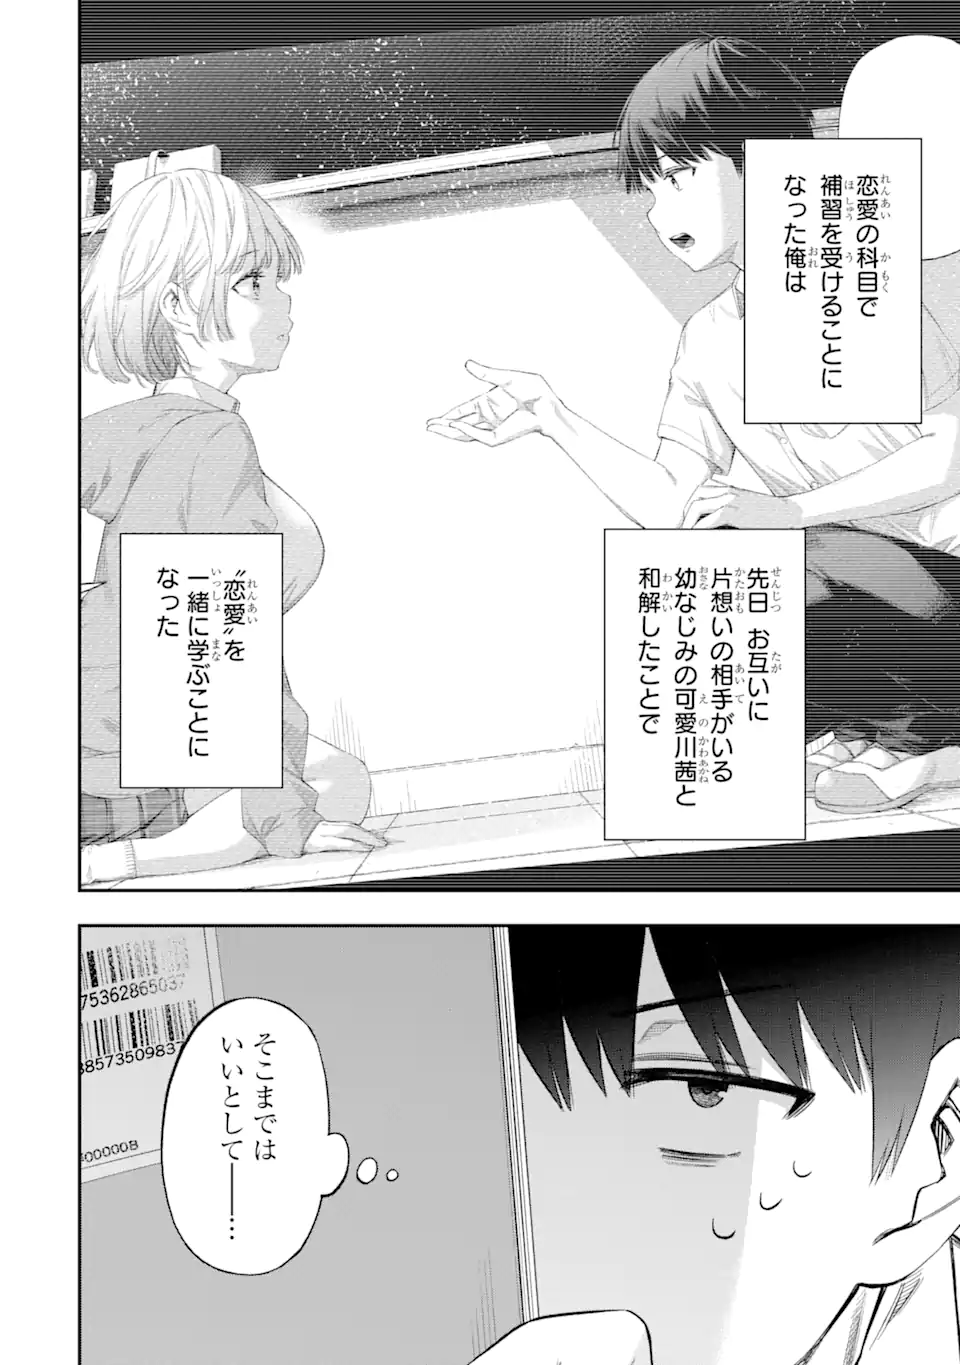 Renai no Jugyou - Chapter 2.1 - Page 5